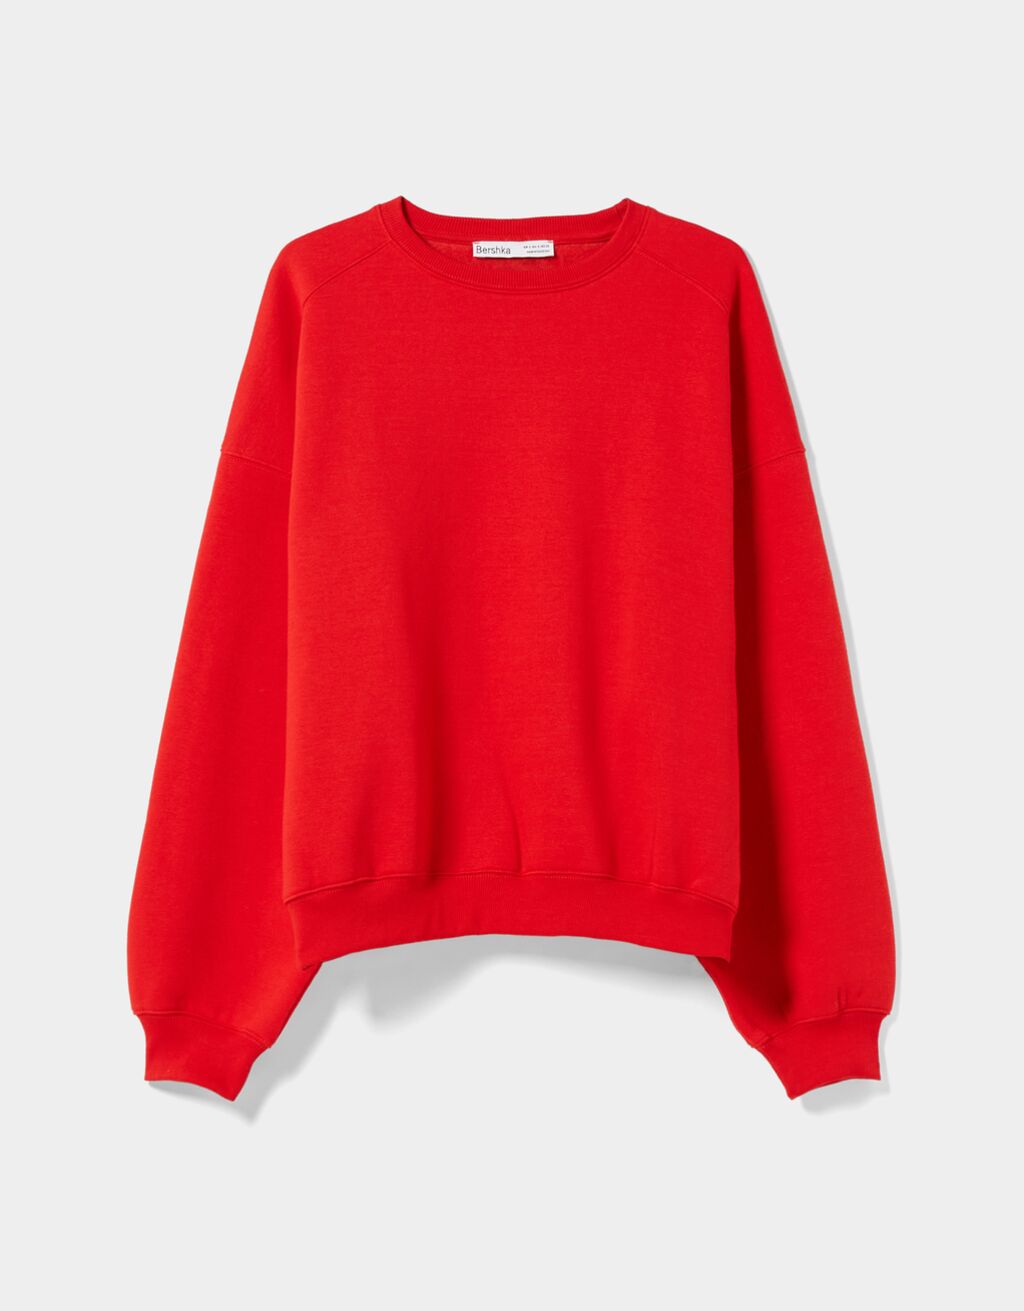 DAMEN Pullovers & Sweatshirts Sweatshirt Print Bershka sweatshirt Rot S Rabatt 62 % 